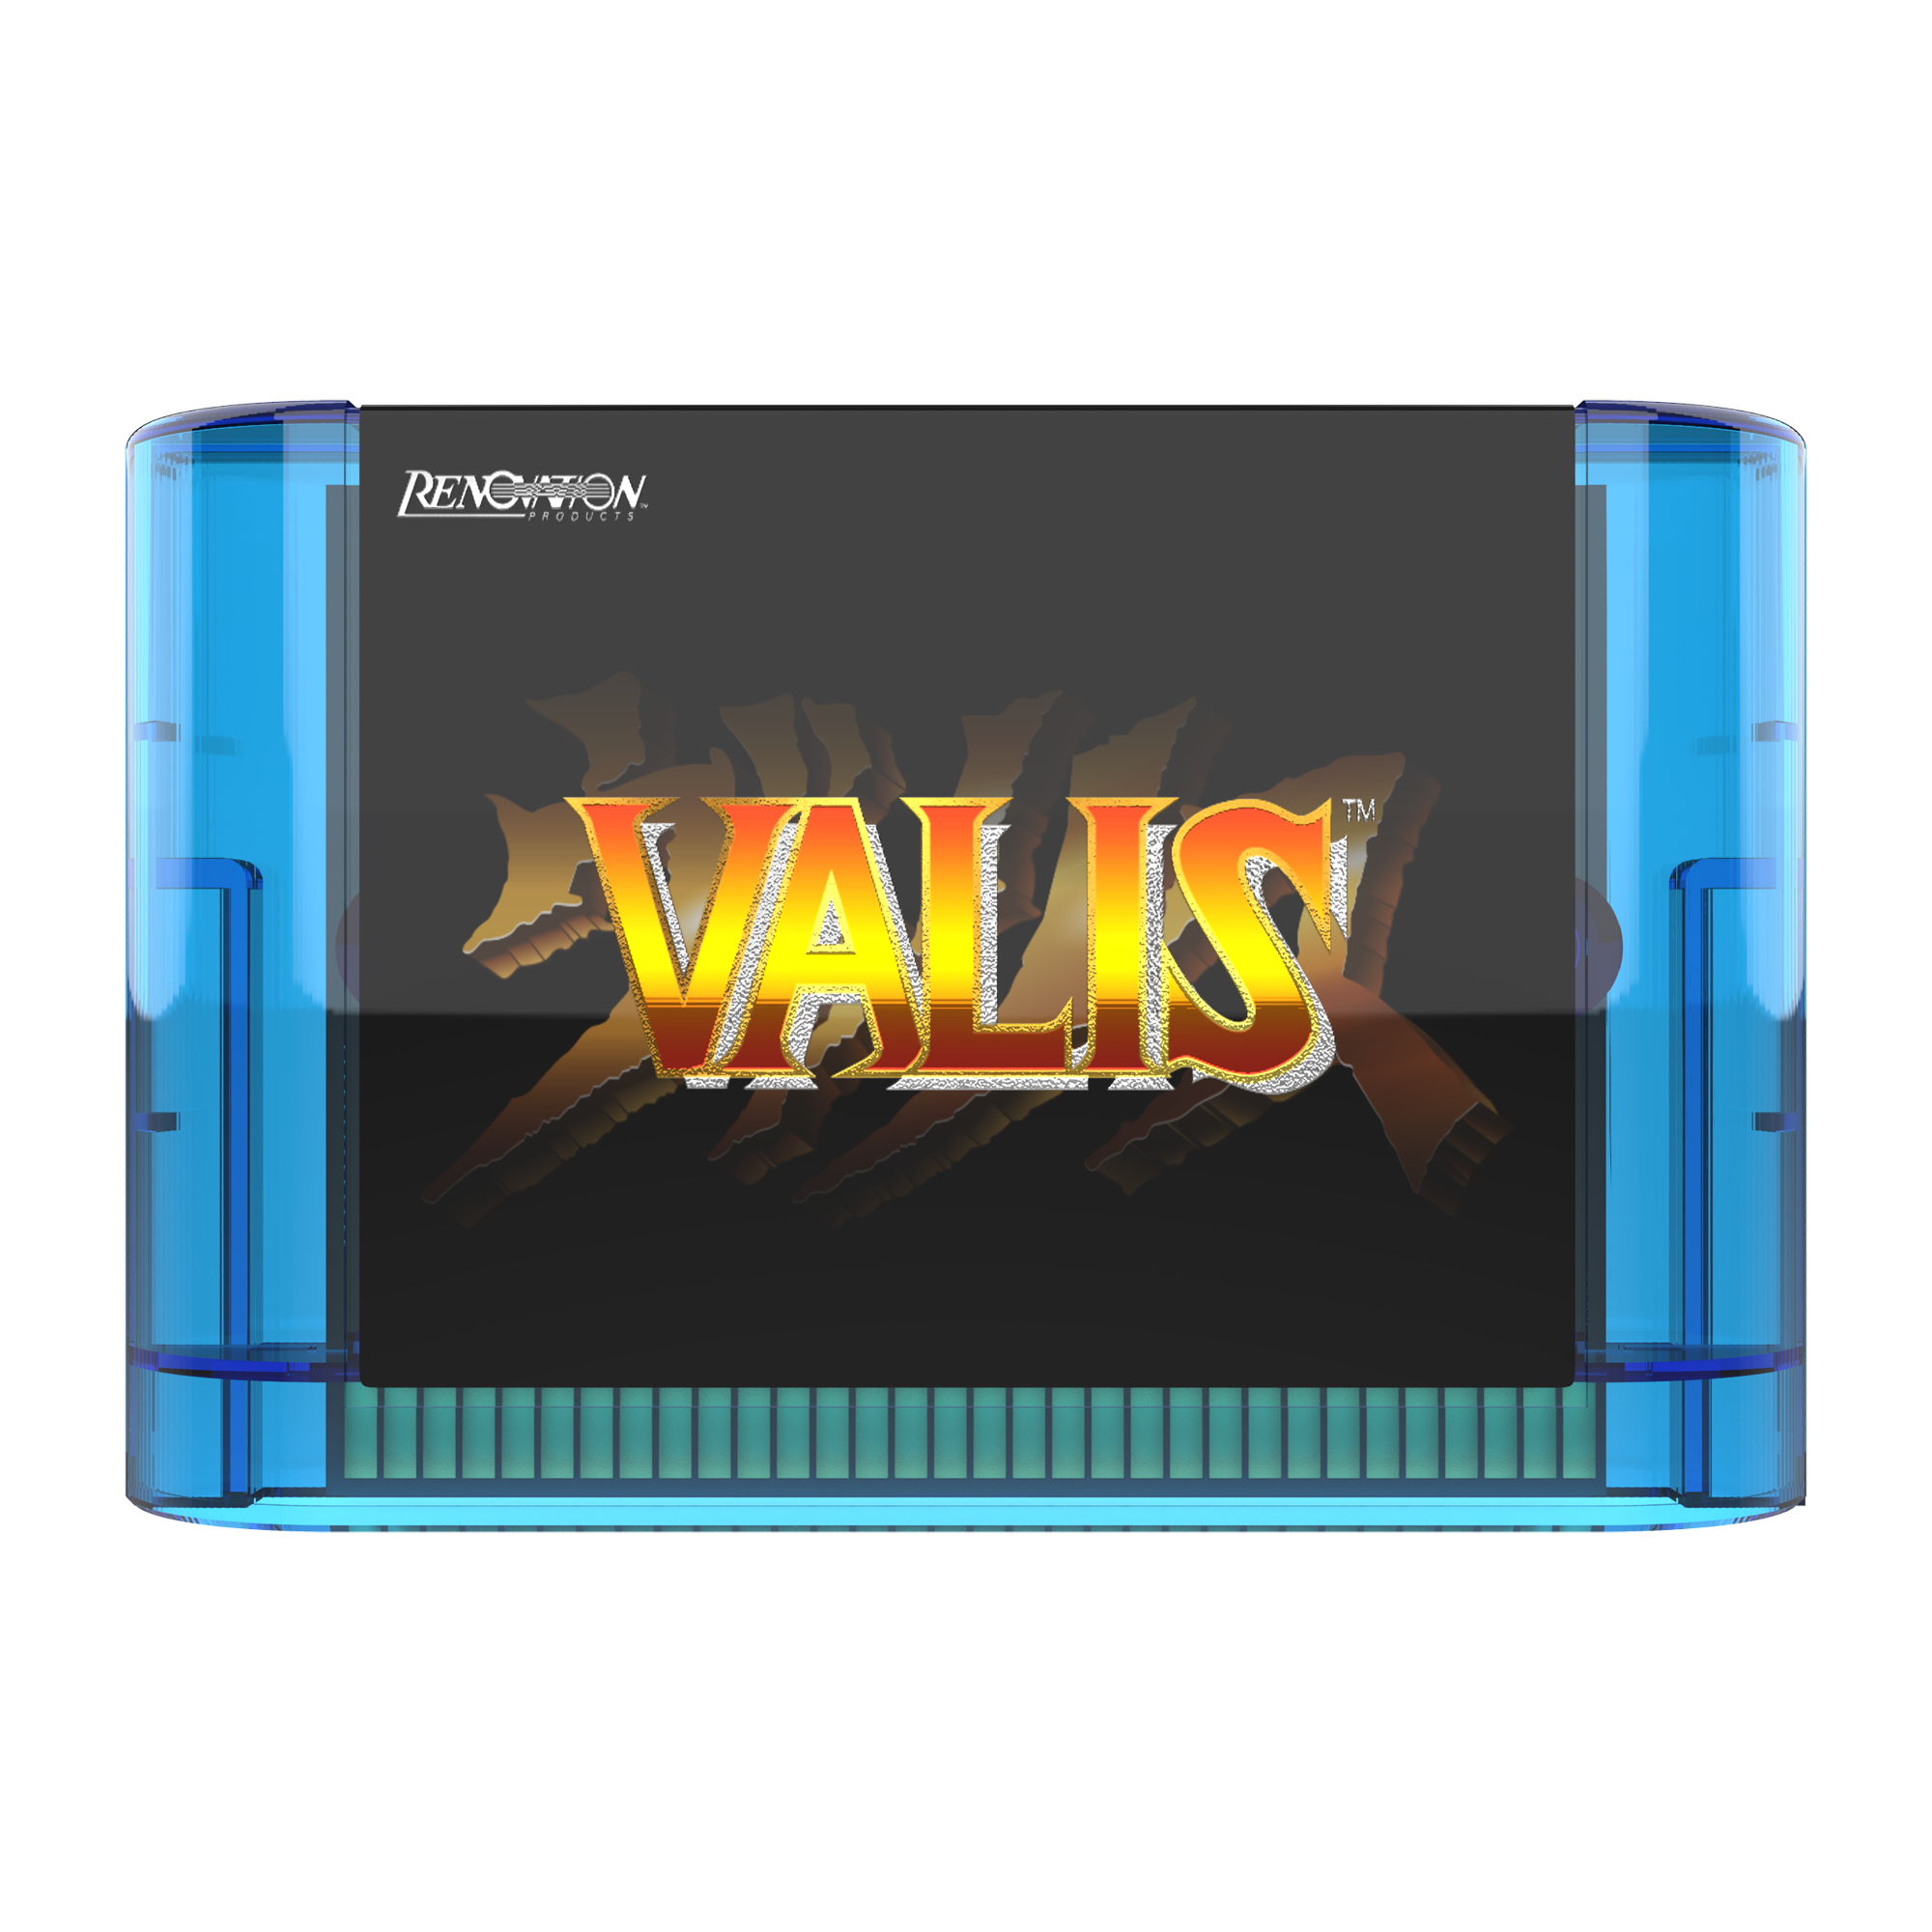 ValisCollectionPressKit Valis TFS Cartridge 00.png